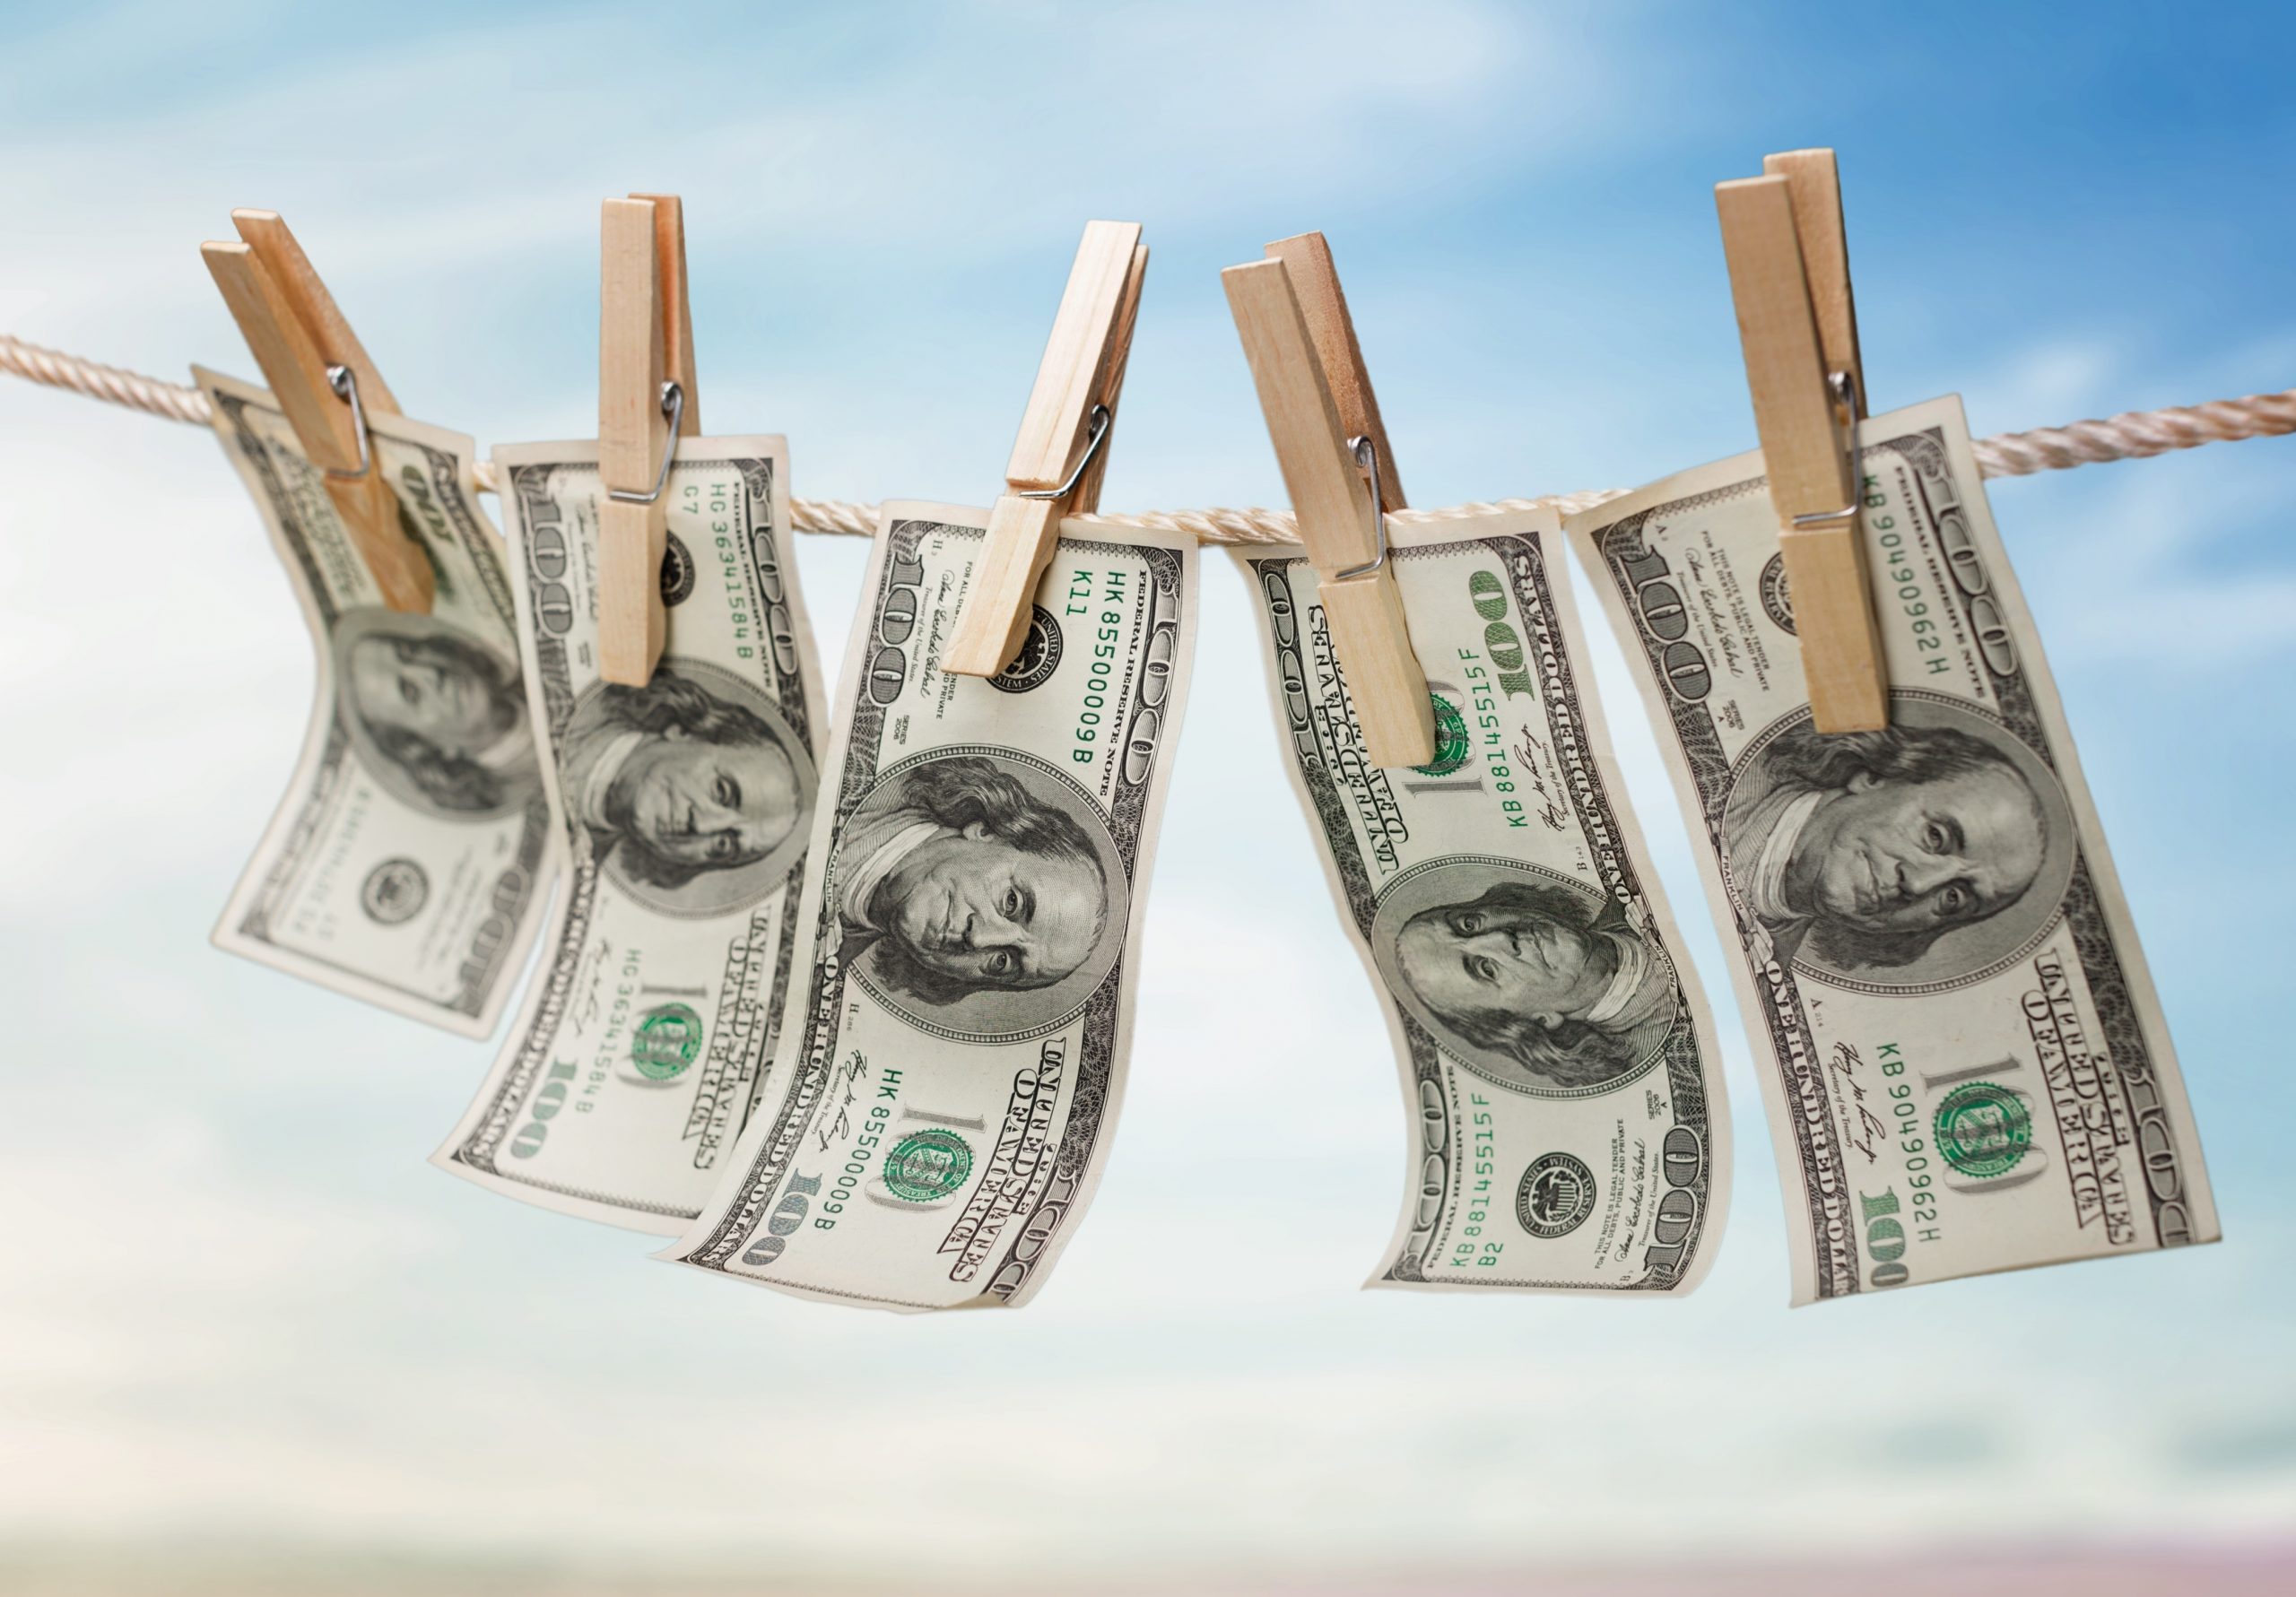 Money Laundering. Hanging $100 bills